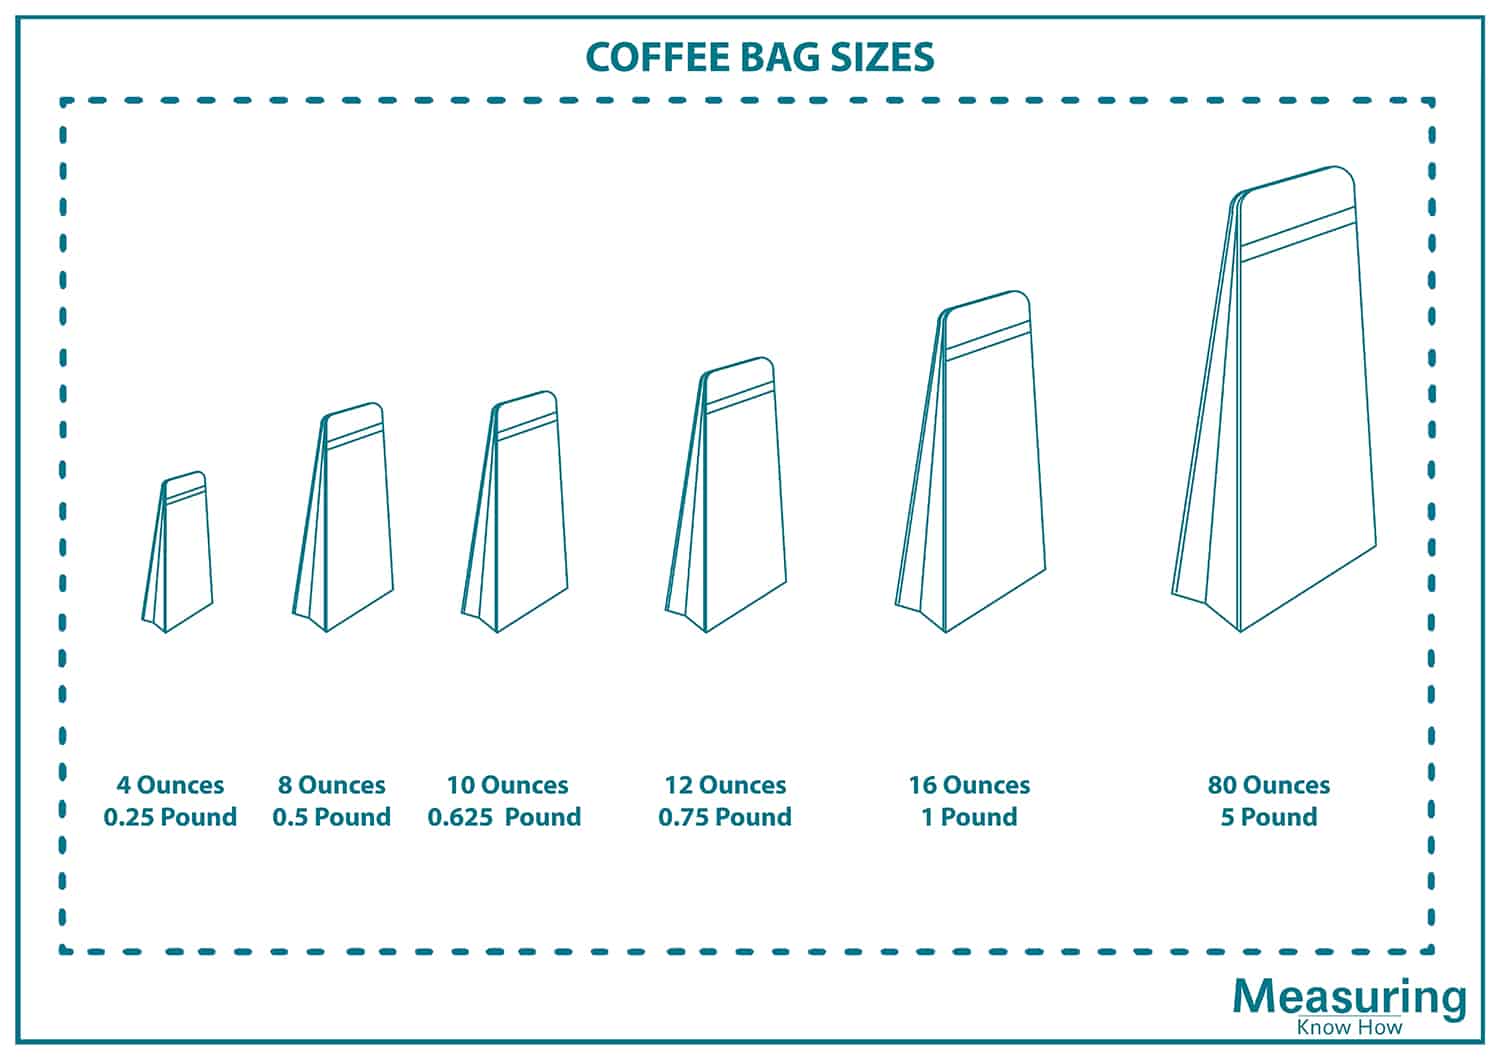 Coffee bag sizes